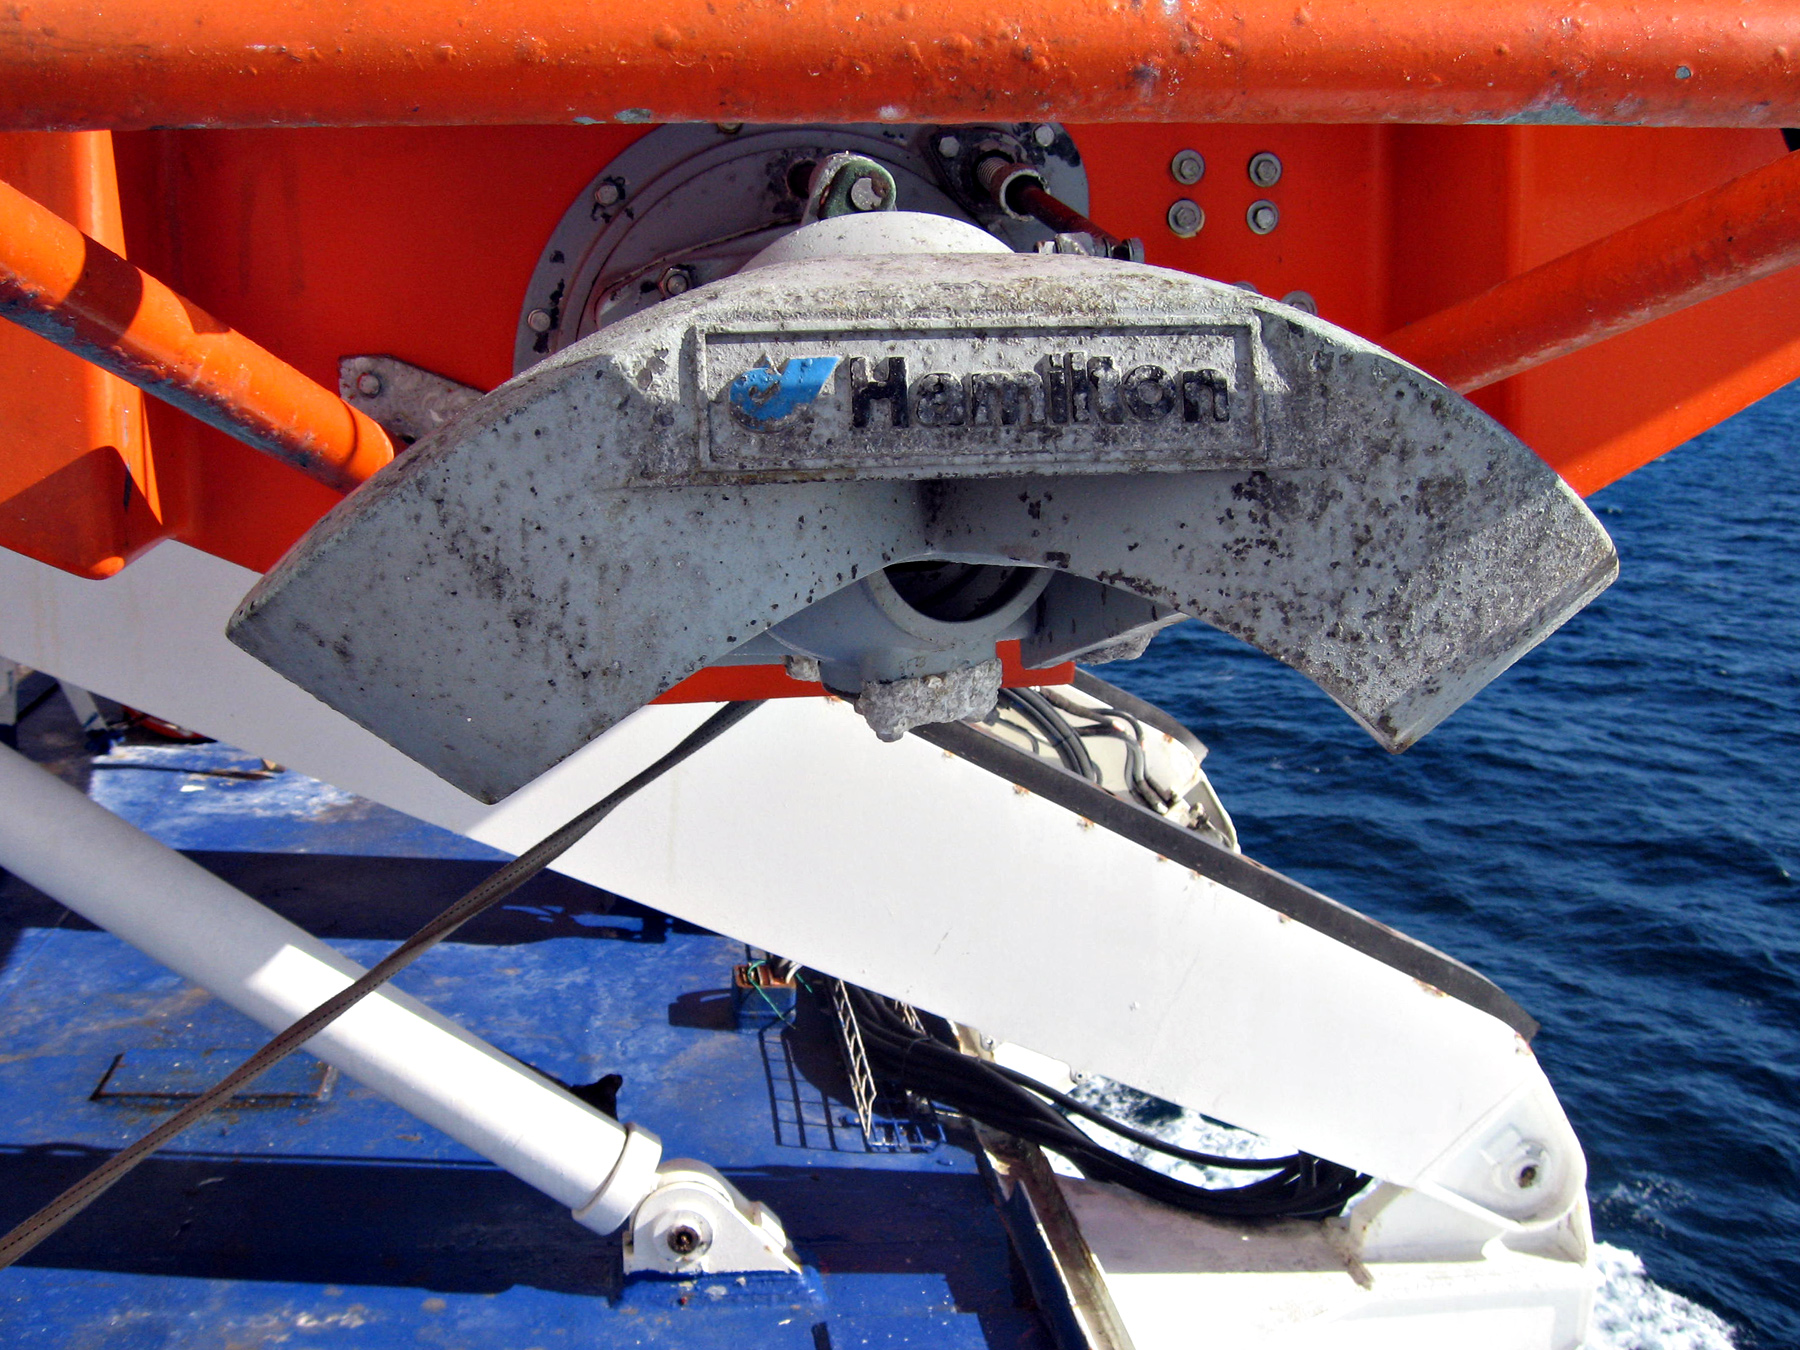 Life boat propeller, Bars, Lifeboat, Metal, Orange, HQ Photo